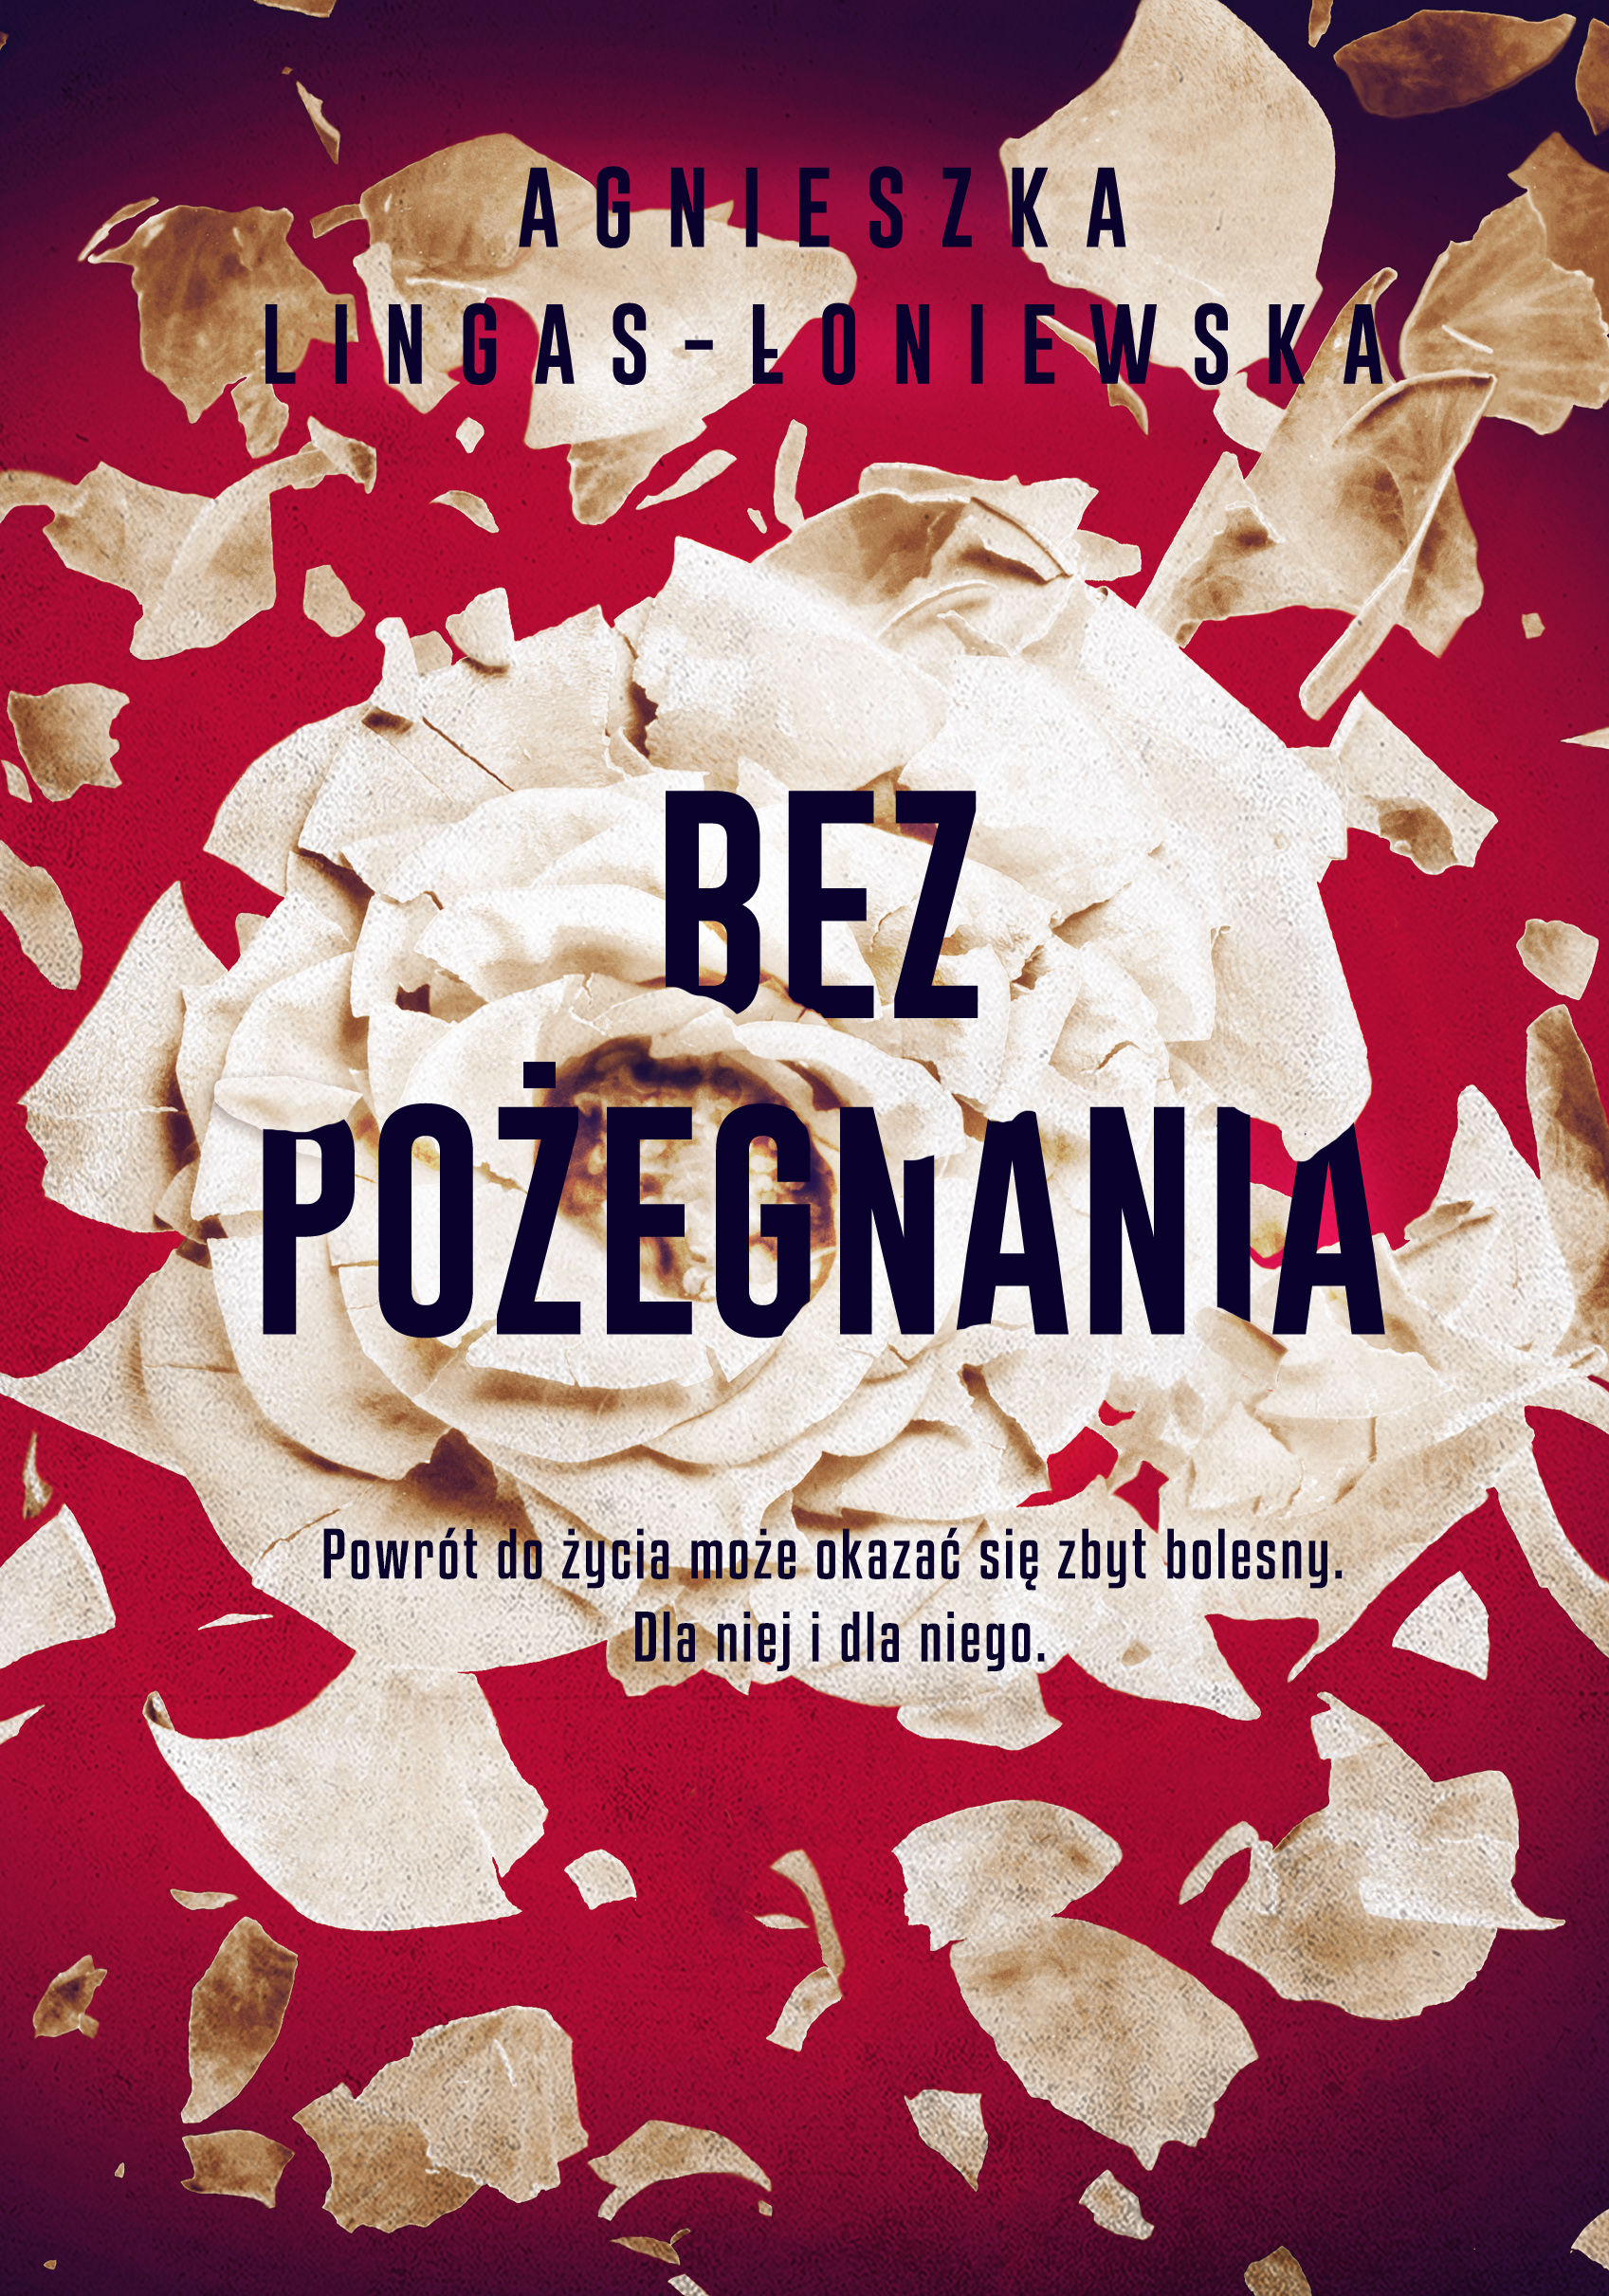 Скачать Bez pożegnania - Agnieszka Lingas-Łoniewska